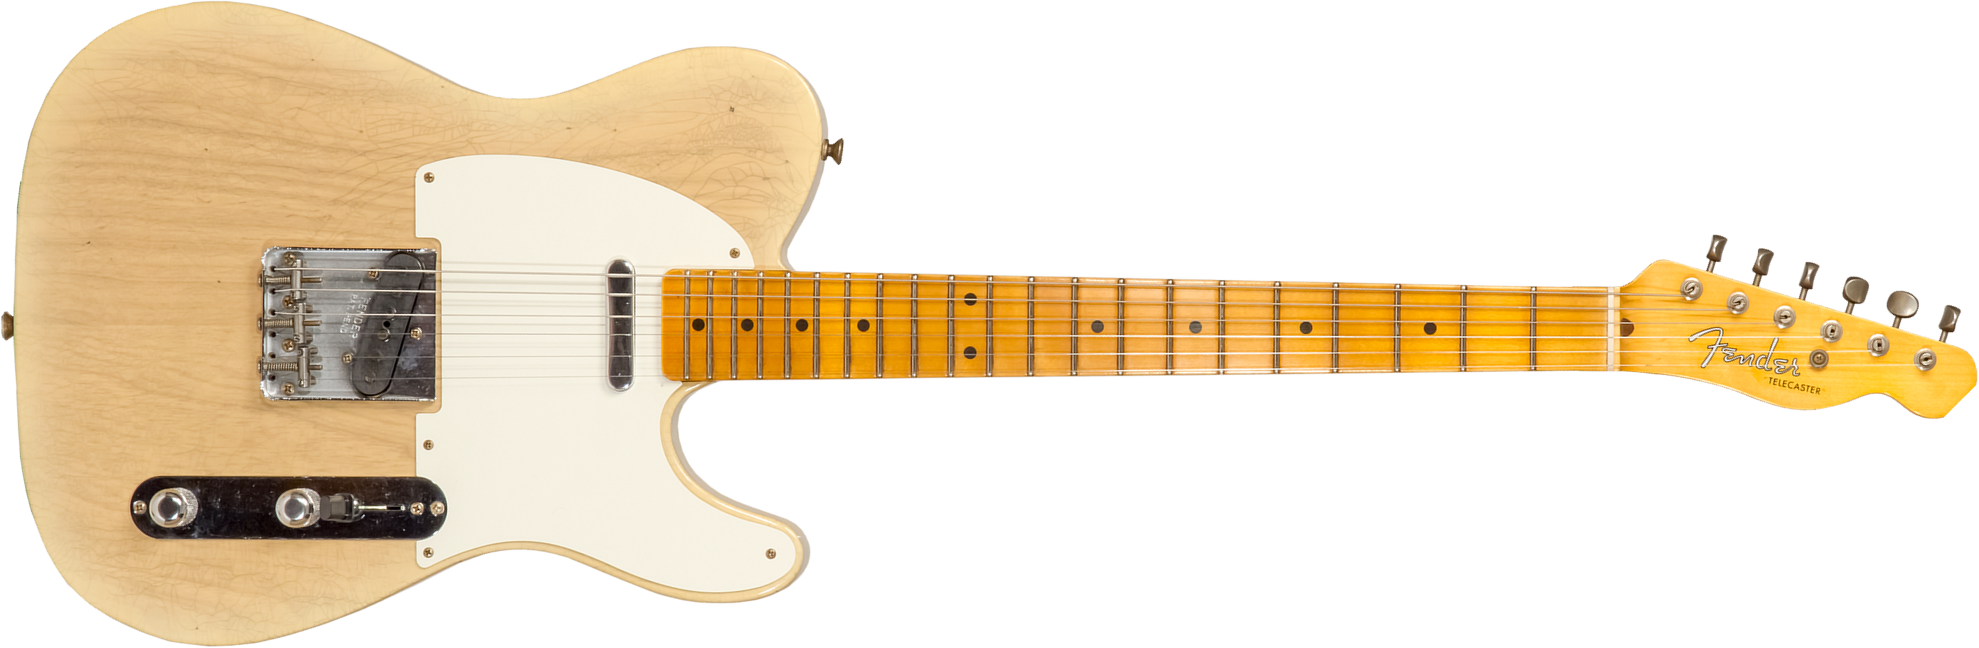 Fender Custom Shop Tele 1955 2s Ht Mn #cz570232 - Journeyman Relic Natural Blonde - Televorm elektrische gitaar - Main picture